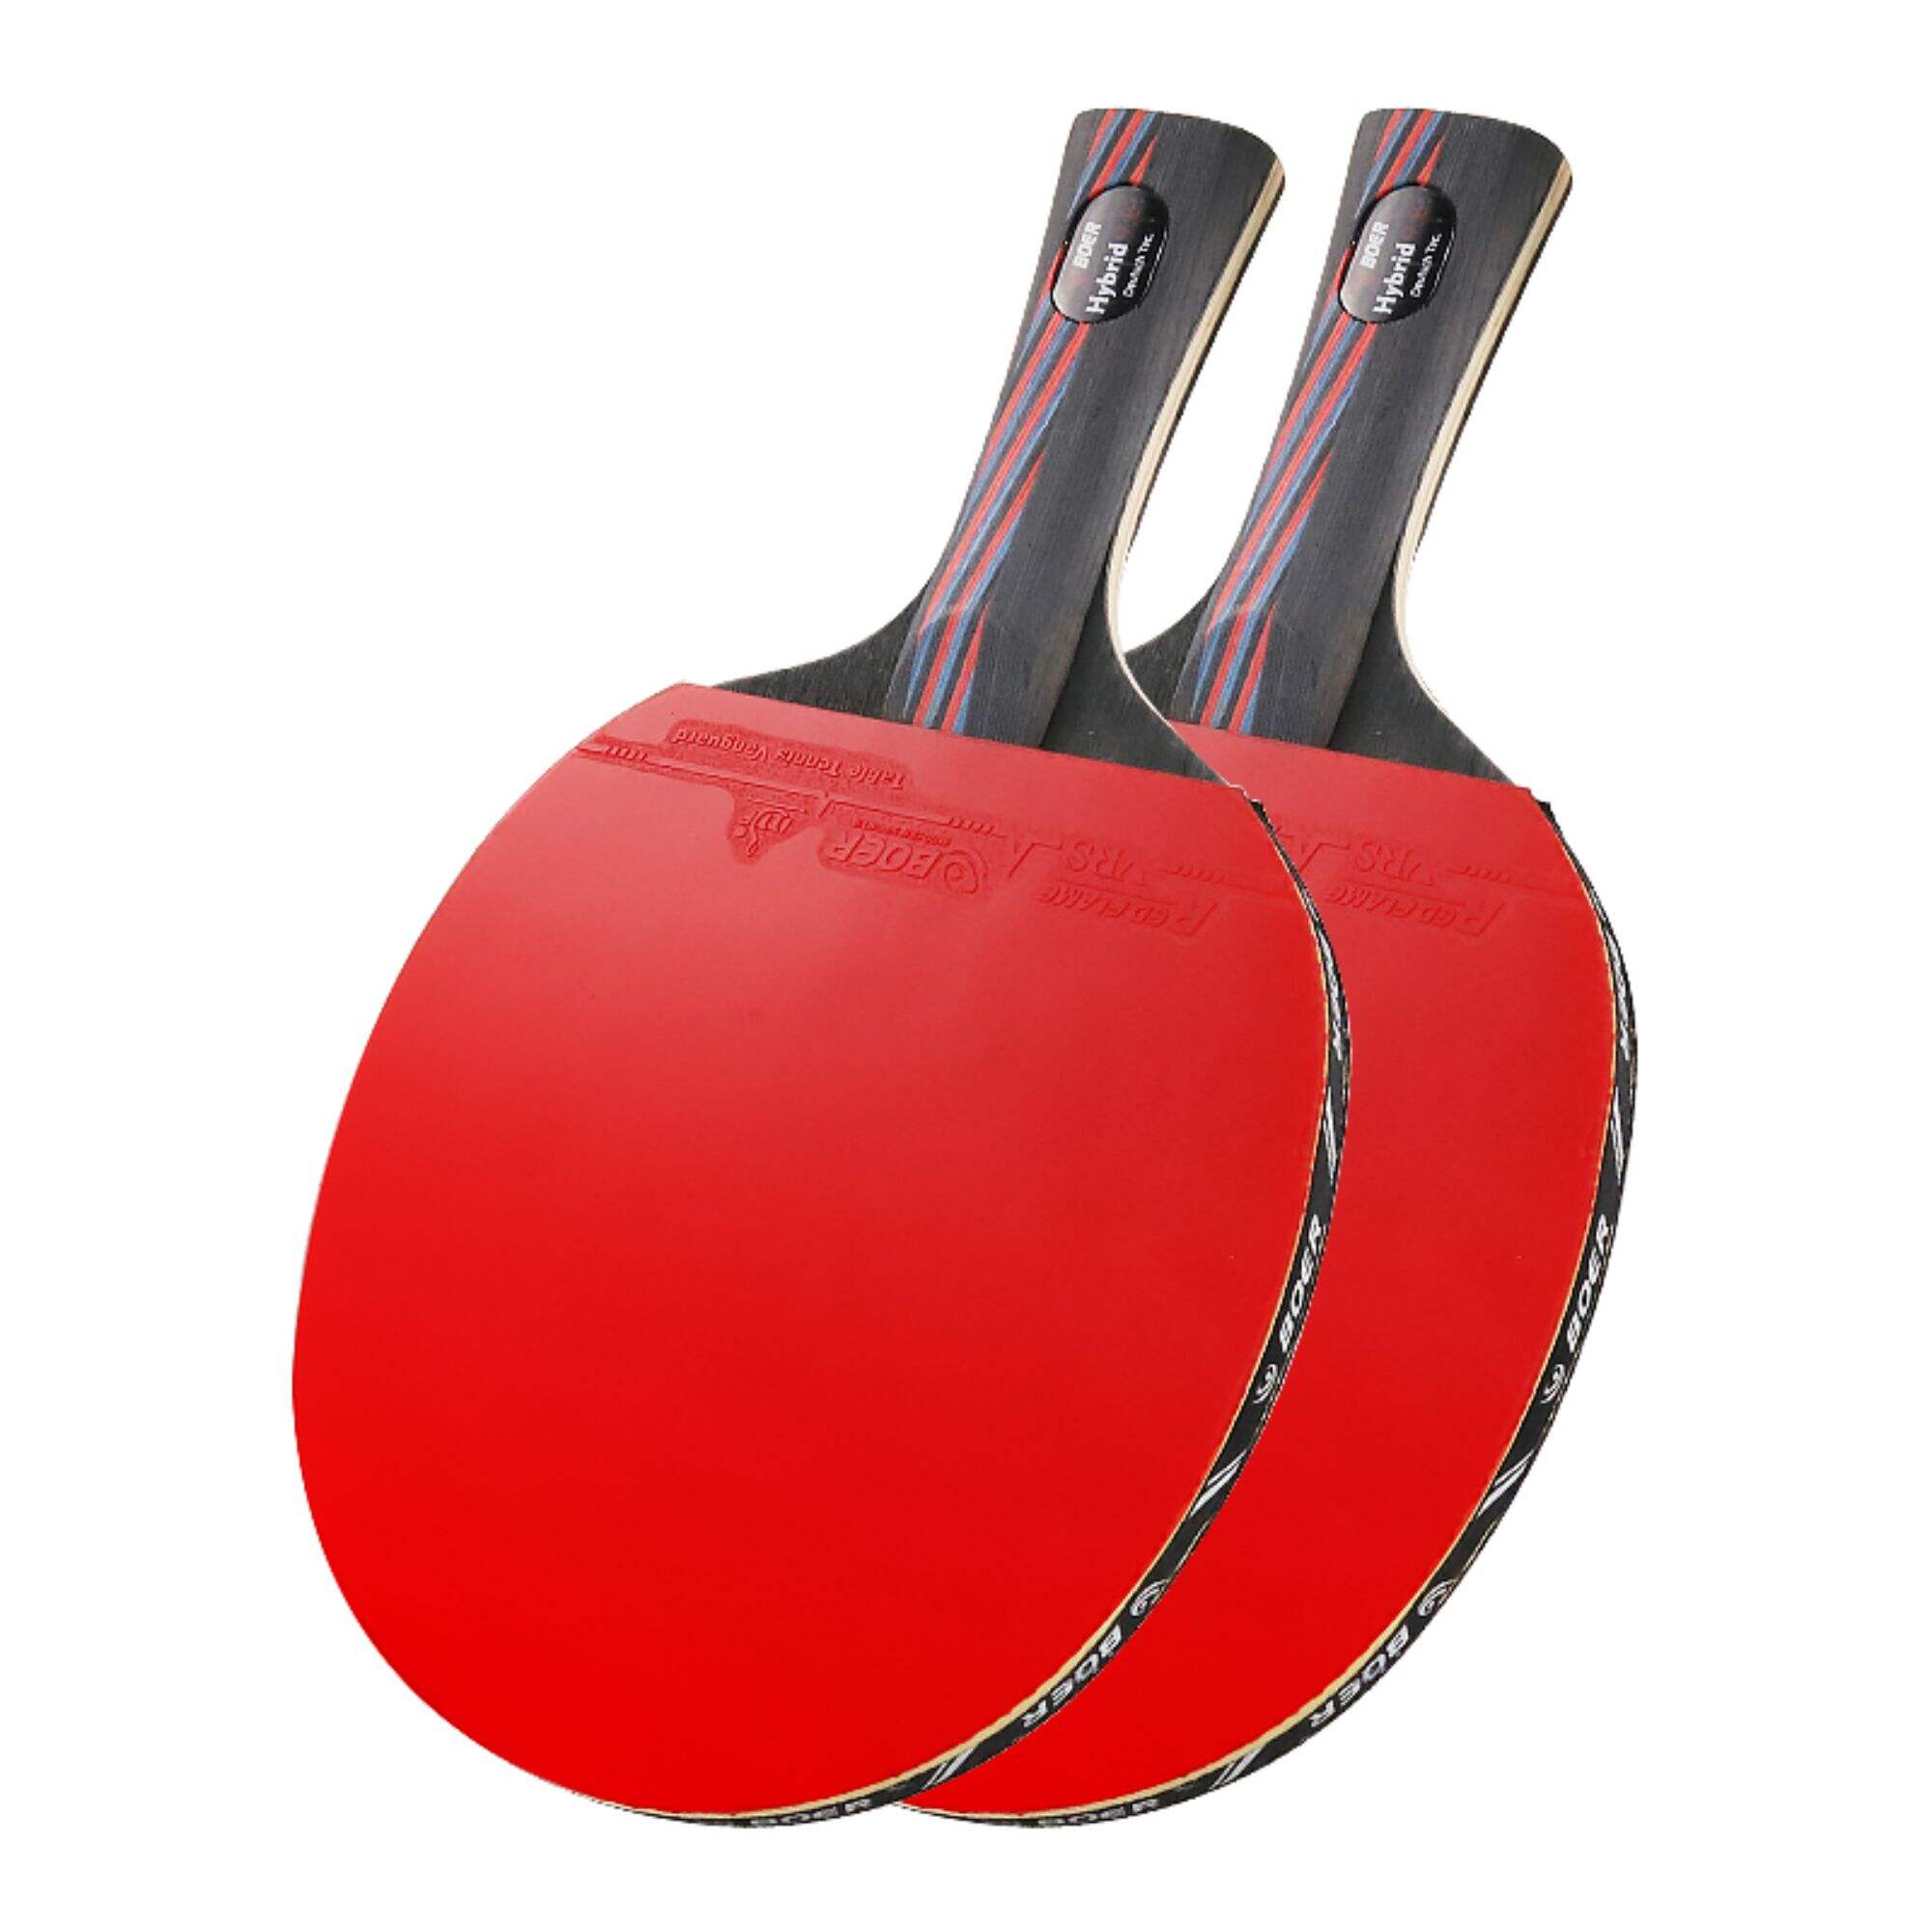 Boer S6 Series High-grade Table Tennis Rakcet/Bat/Paddle